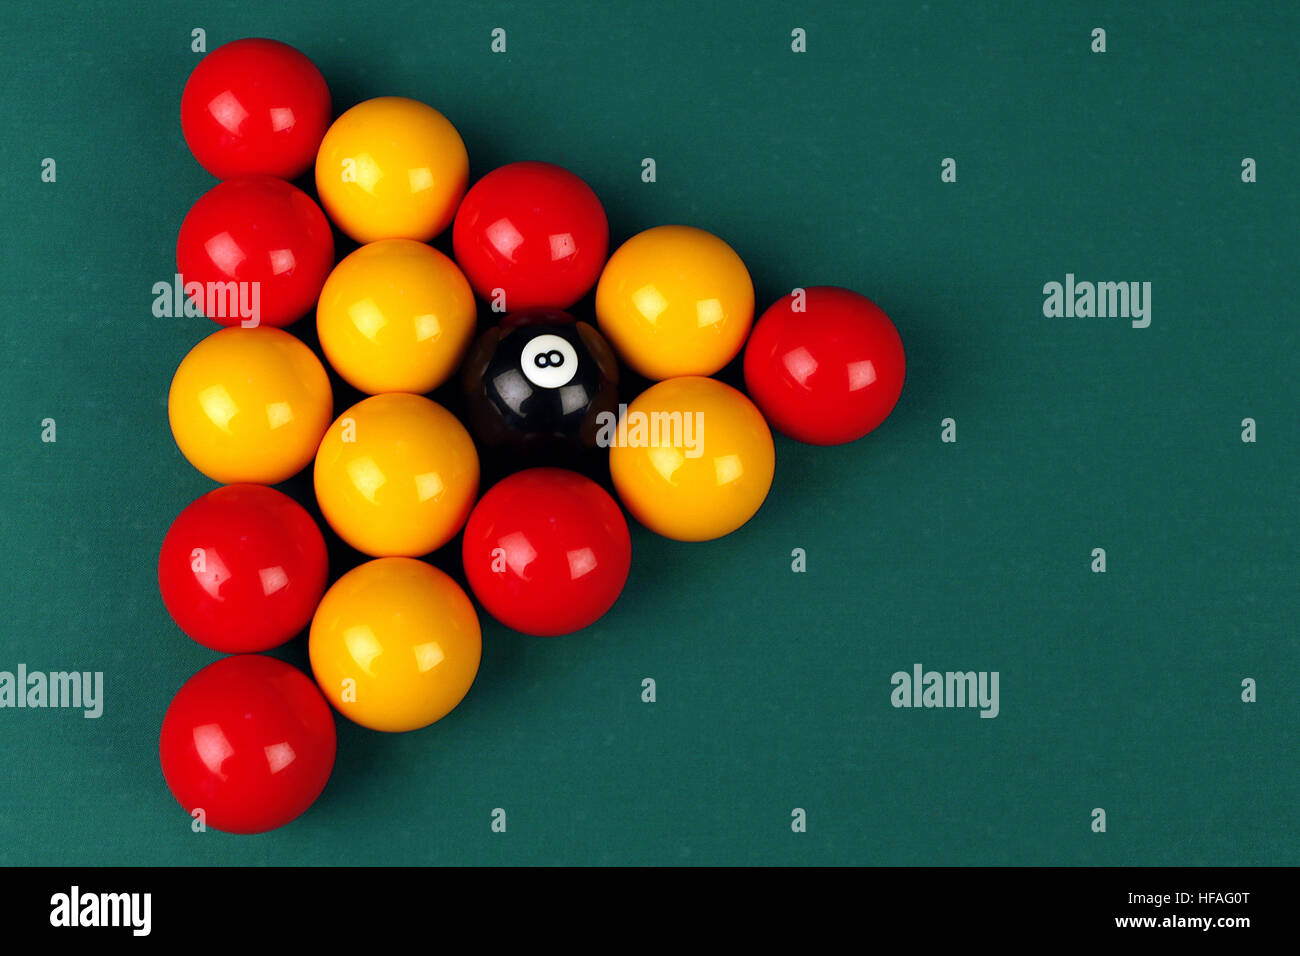 8 Ball Billiards or English Billiards Stock Photo - Alamy